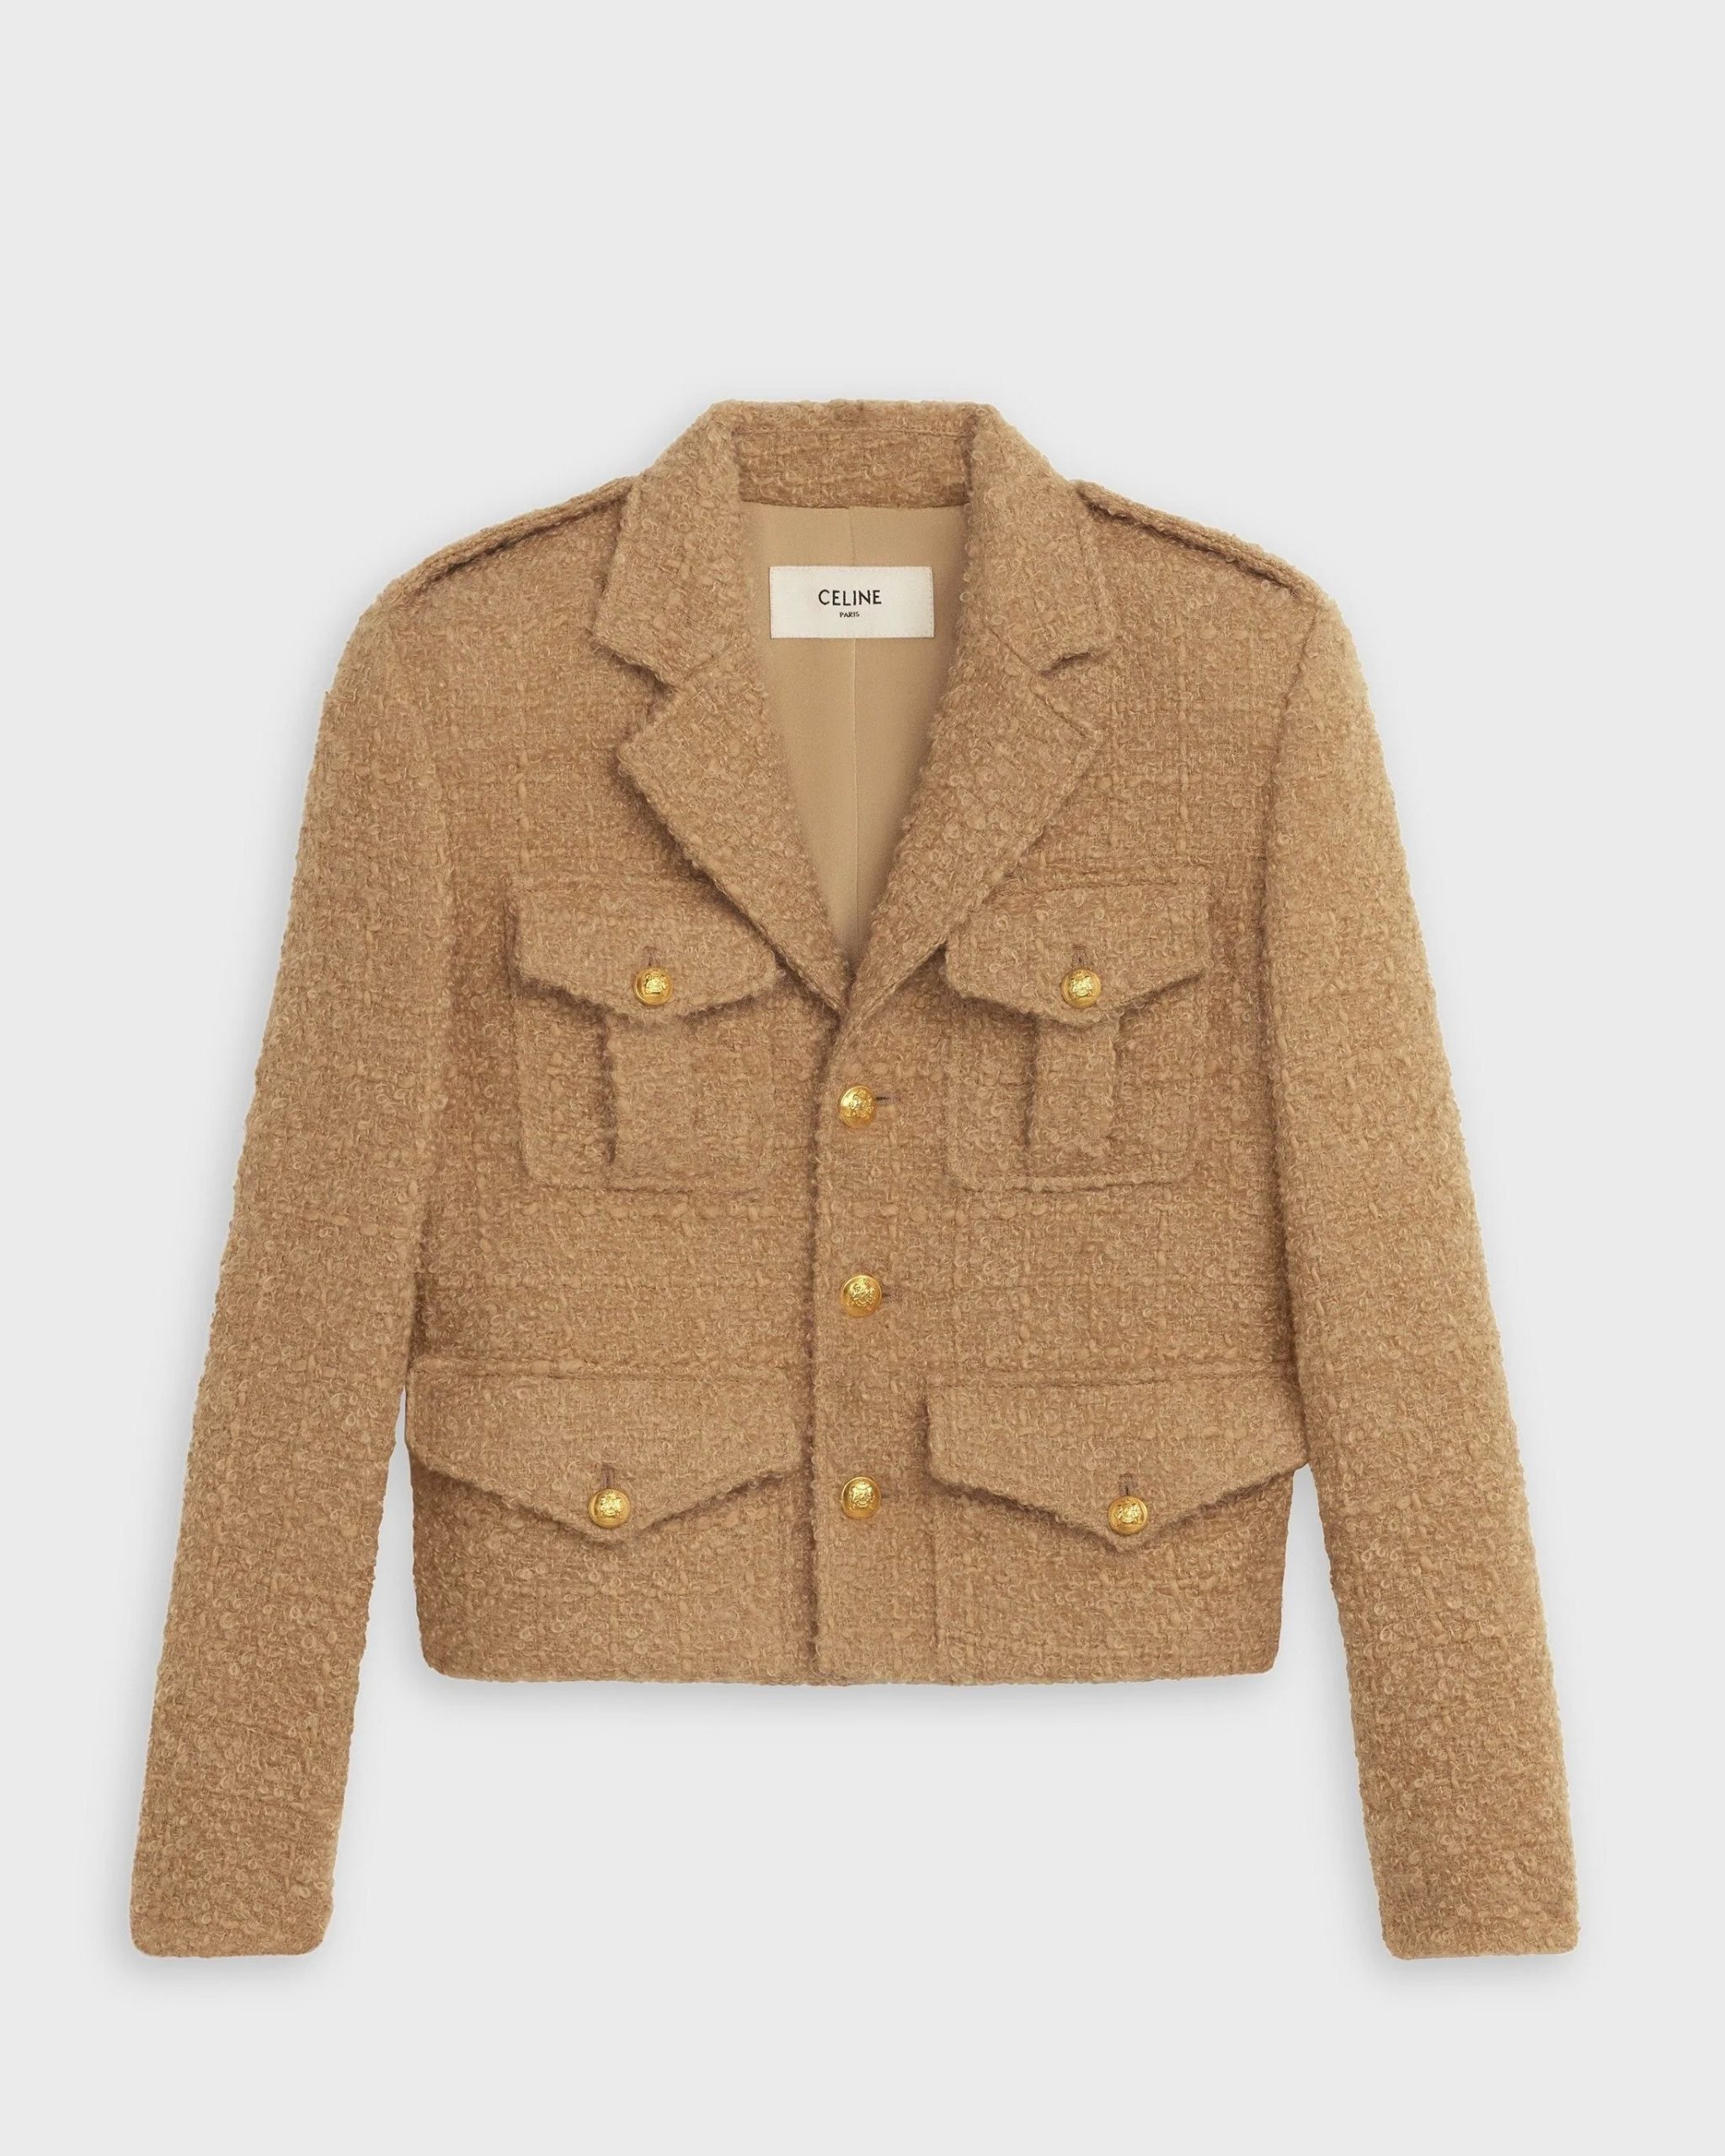 Celine 'Chasseur' Jacket In Mohair Wool